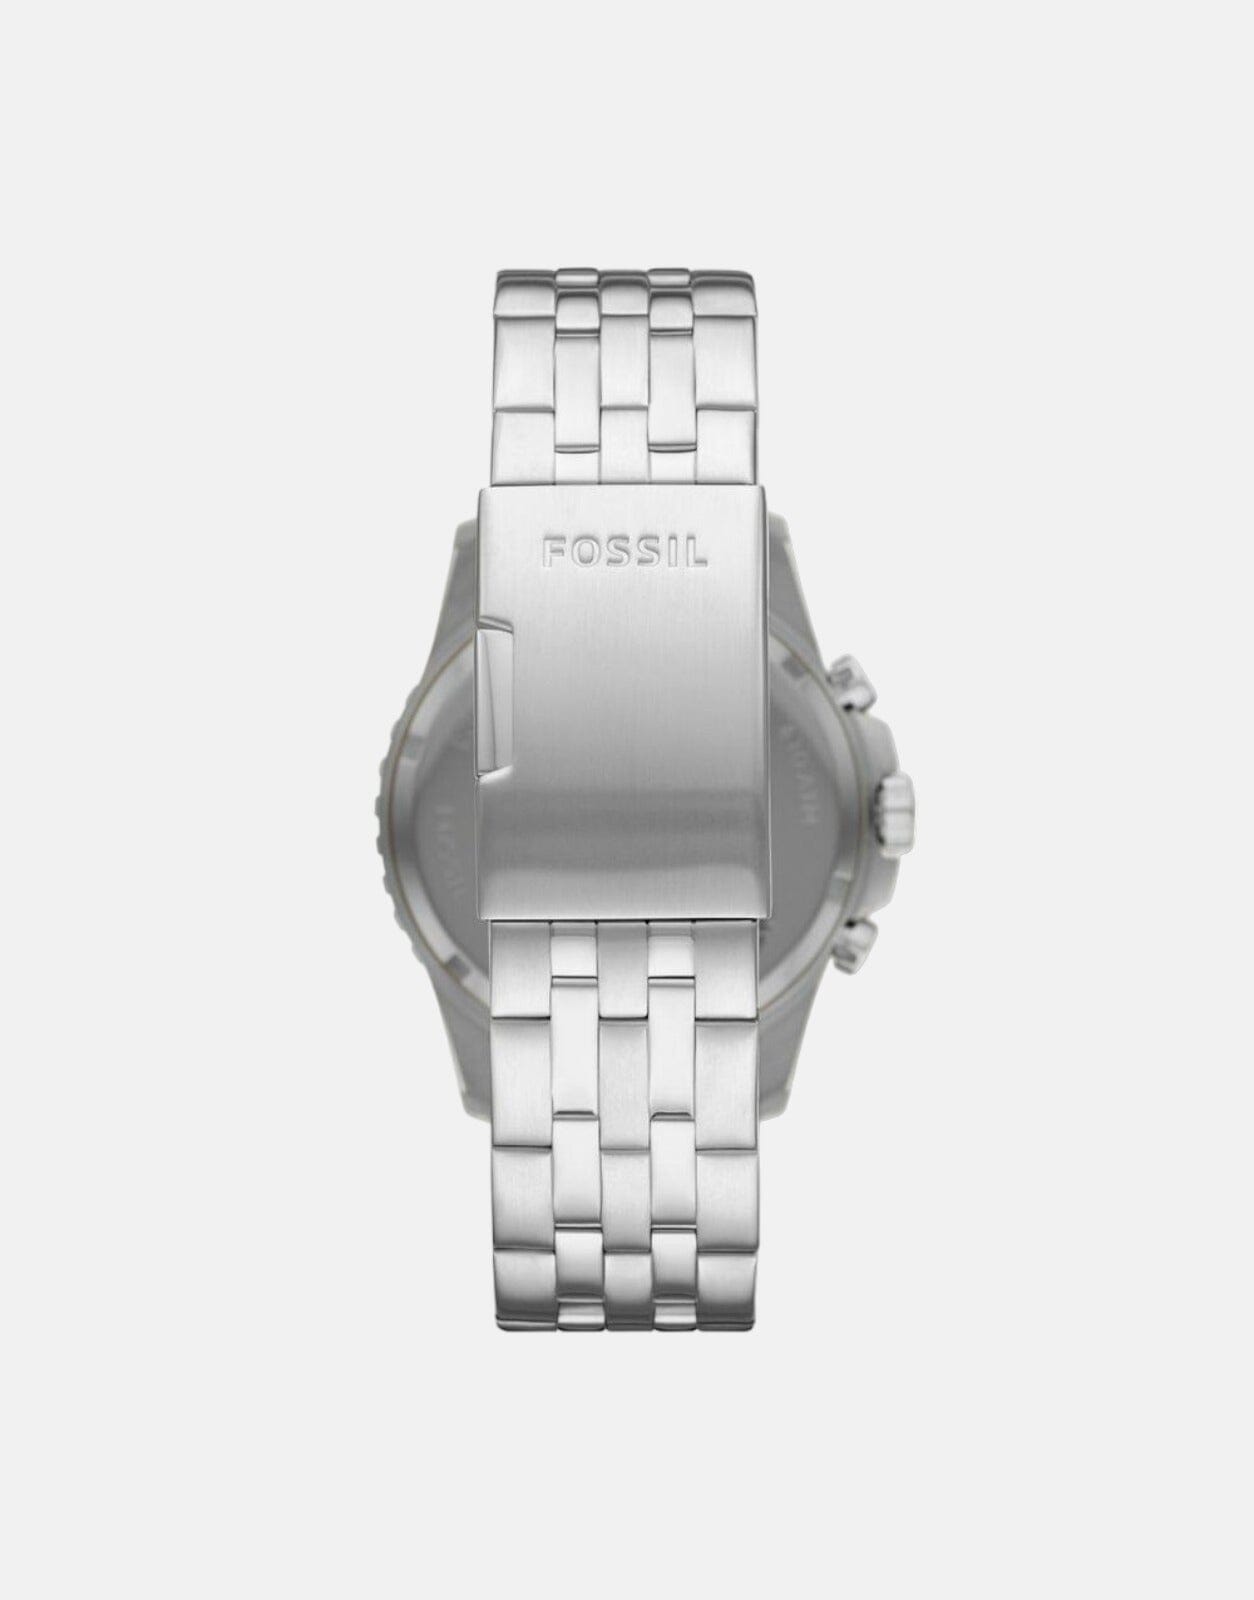 Fossil FB-01 Chrono Stainless Steel Watch - Subwear